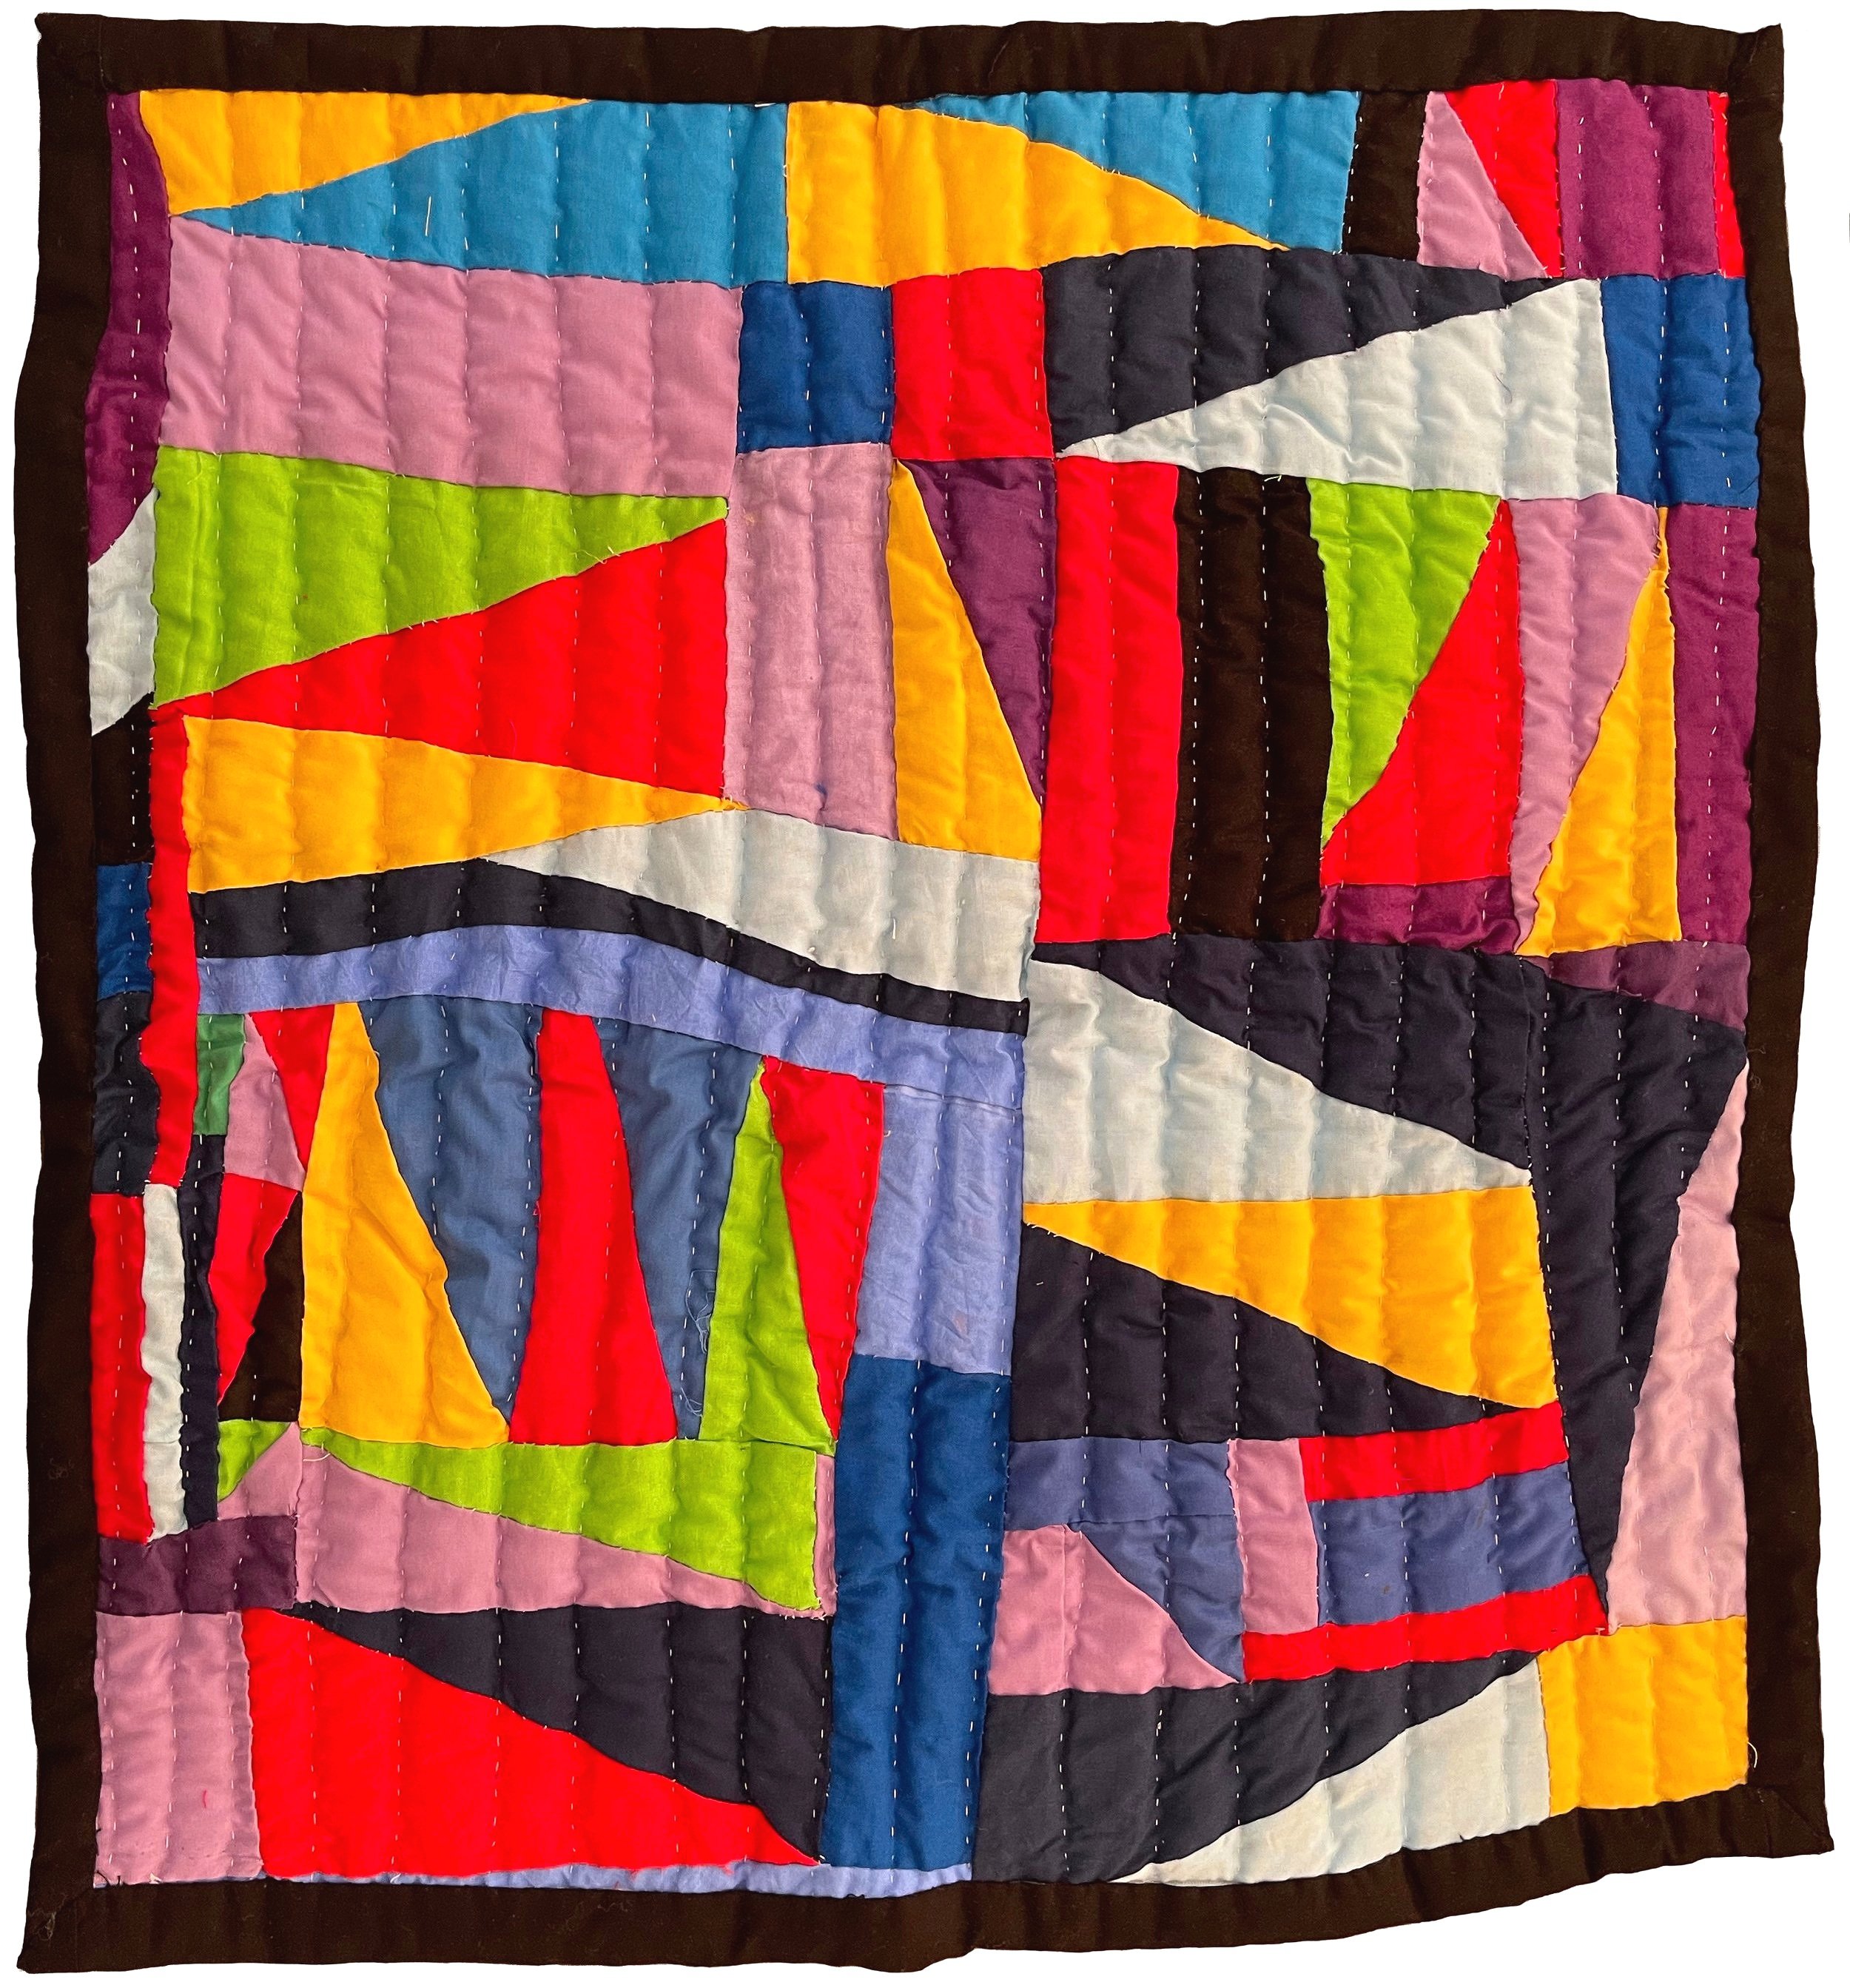   Stella Mae Pettway    Improvisational Quilt, 2021   25” x 24”  Cotton fabrics  Hand-pieced, hand-quilted    REQUEST MORE INFORMATION   